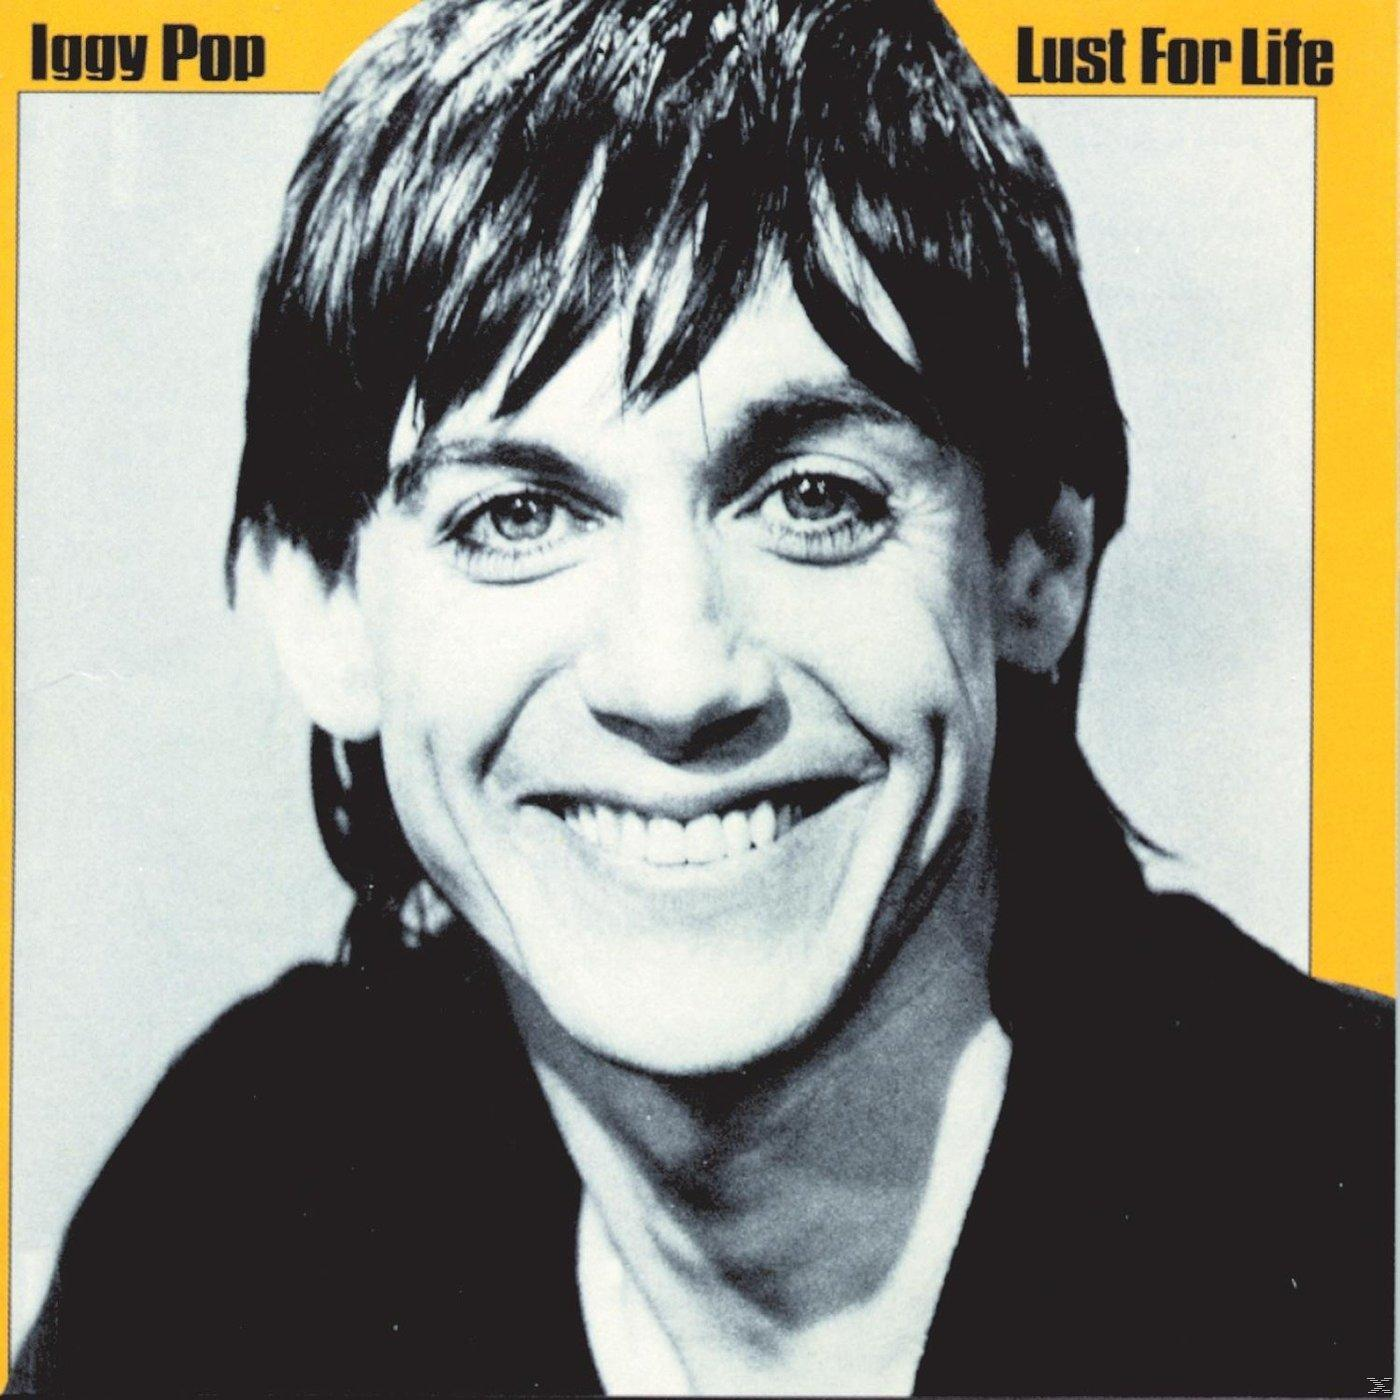 Iggy LIFE FOR (Vinyl) - - LUST Pop